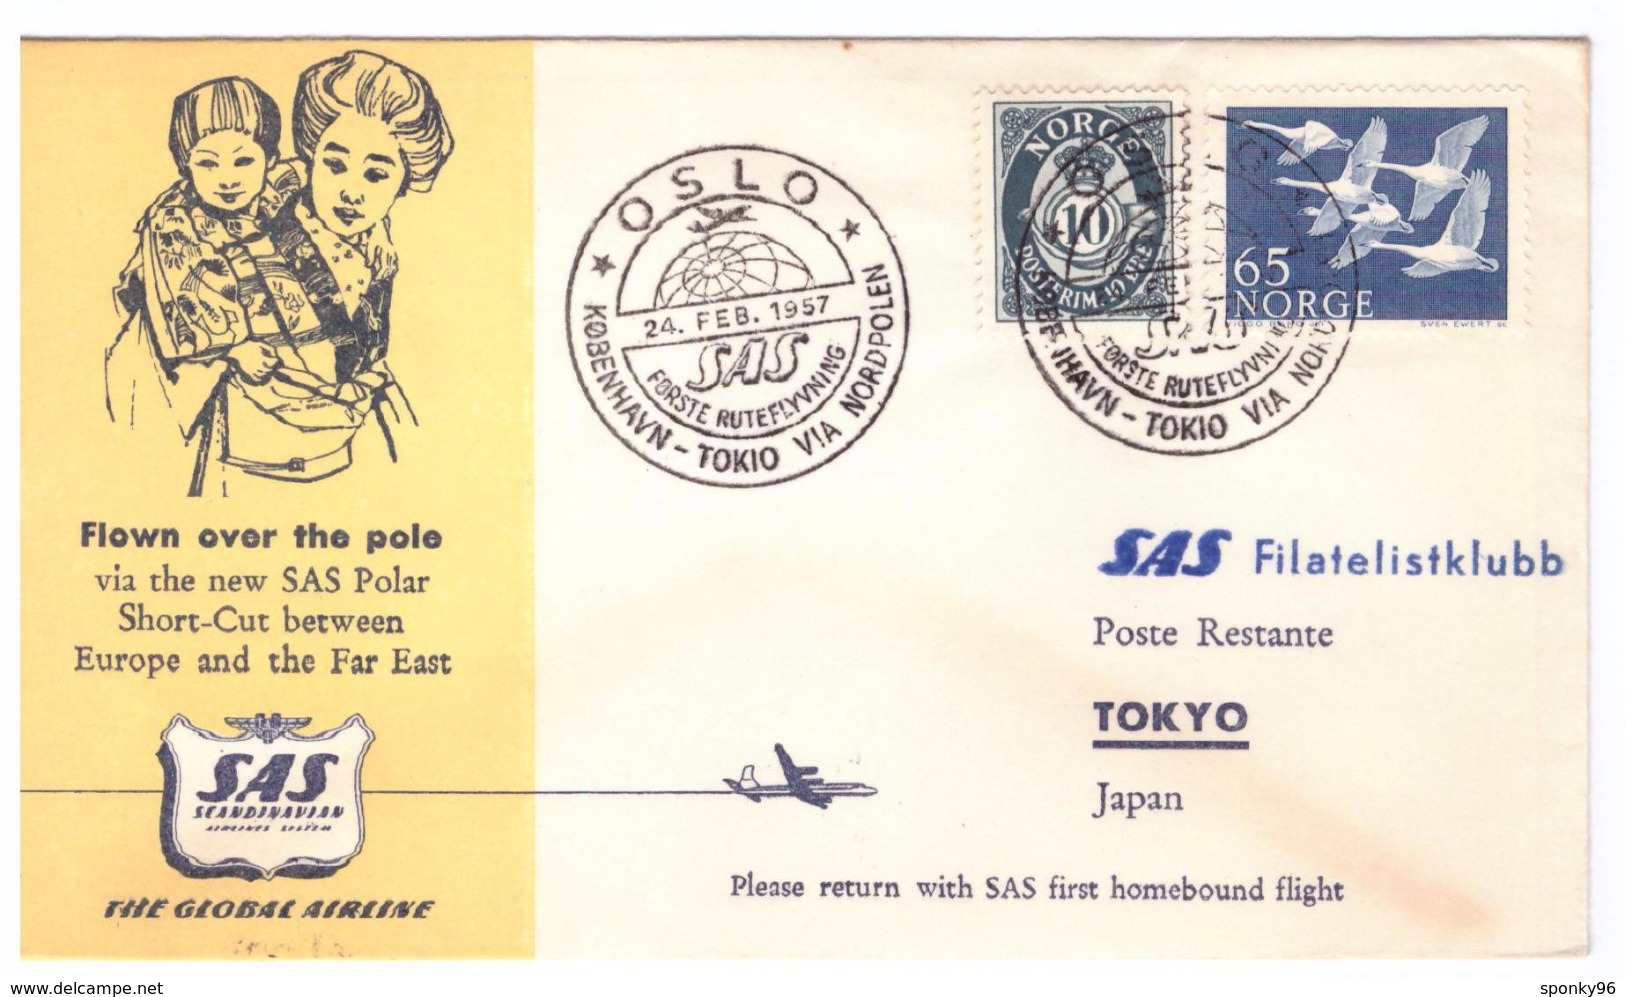 STORIA POSTALE - GIAPPONE - JAPAN - ANNO 1957 - TOKIO - OSLO - FILATELISTIKLUBB - FLOWN OVER THE PEOPLE - THE NEW SAS - Briefe U. Dokumente